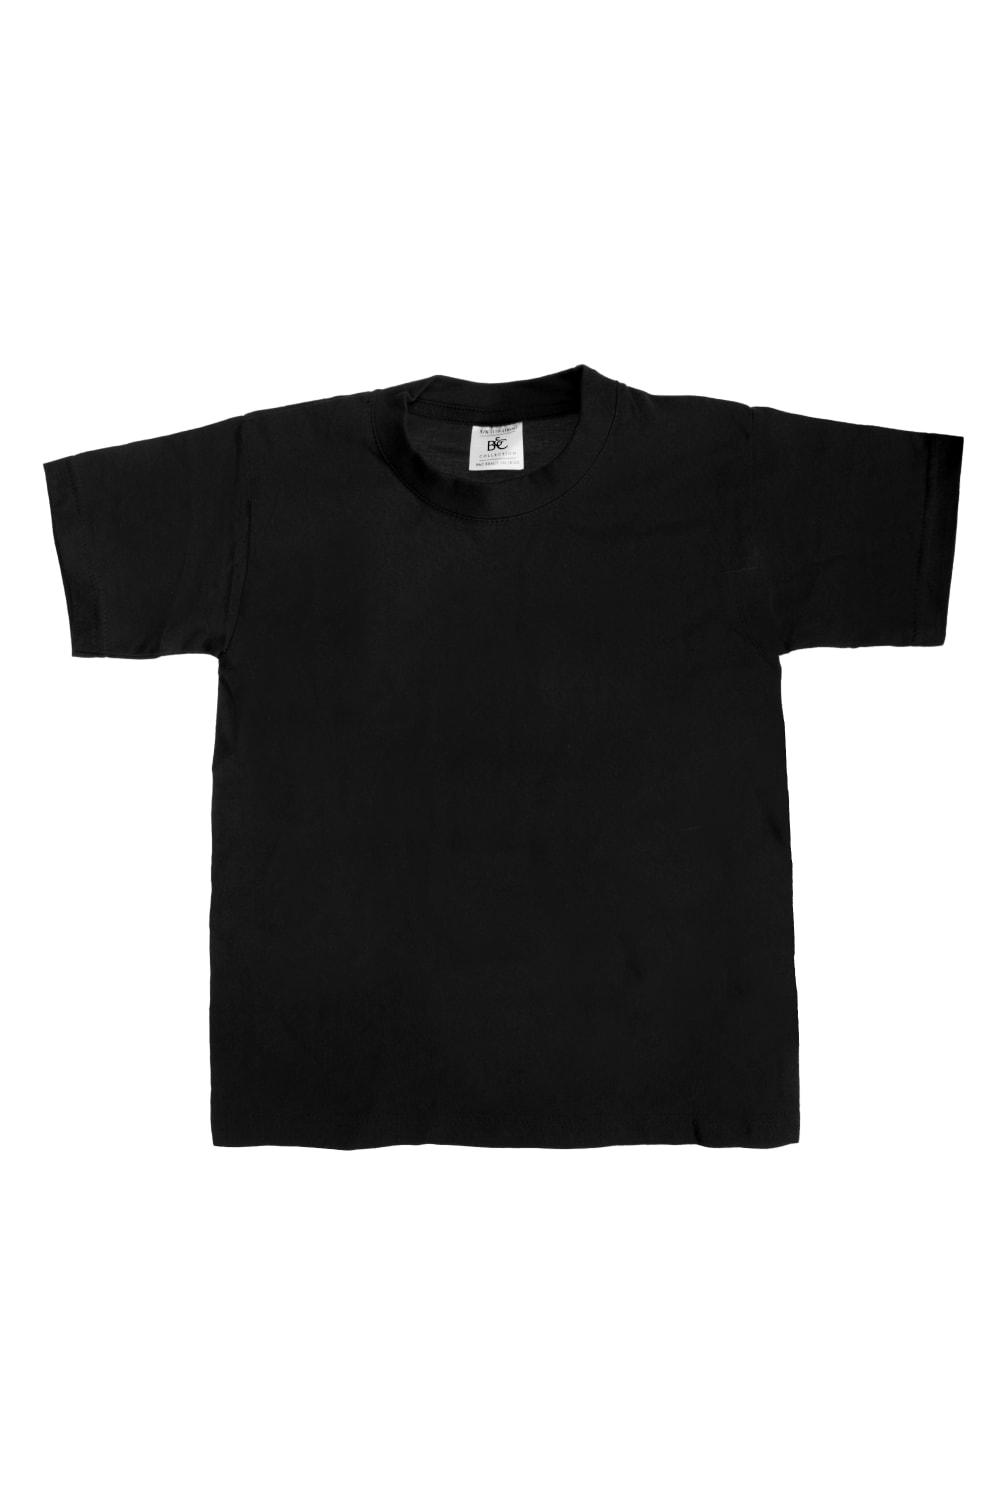 Big Boys Kids/Childrens Exact 190 Short Sleeved T-Shirt (Pack Of 2) - Black